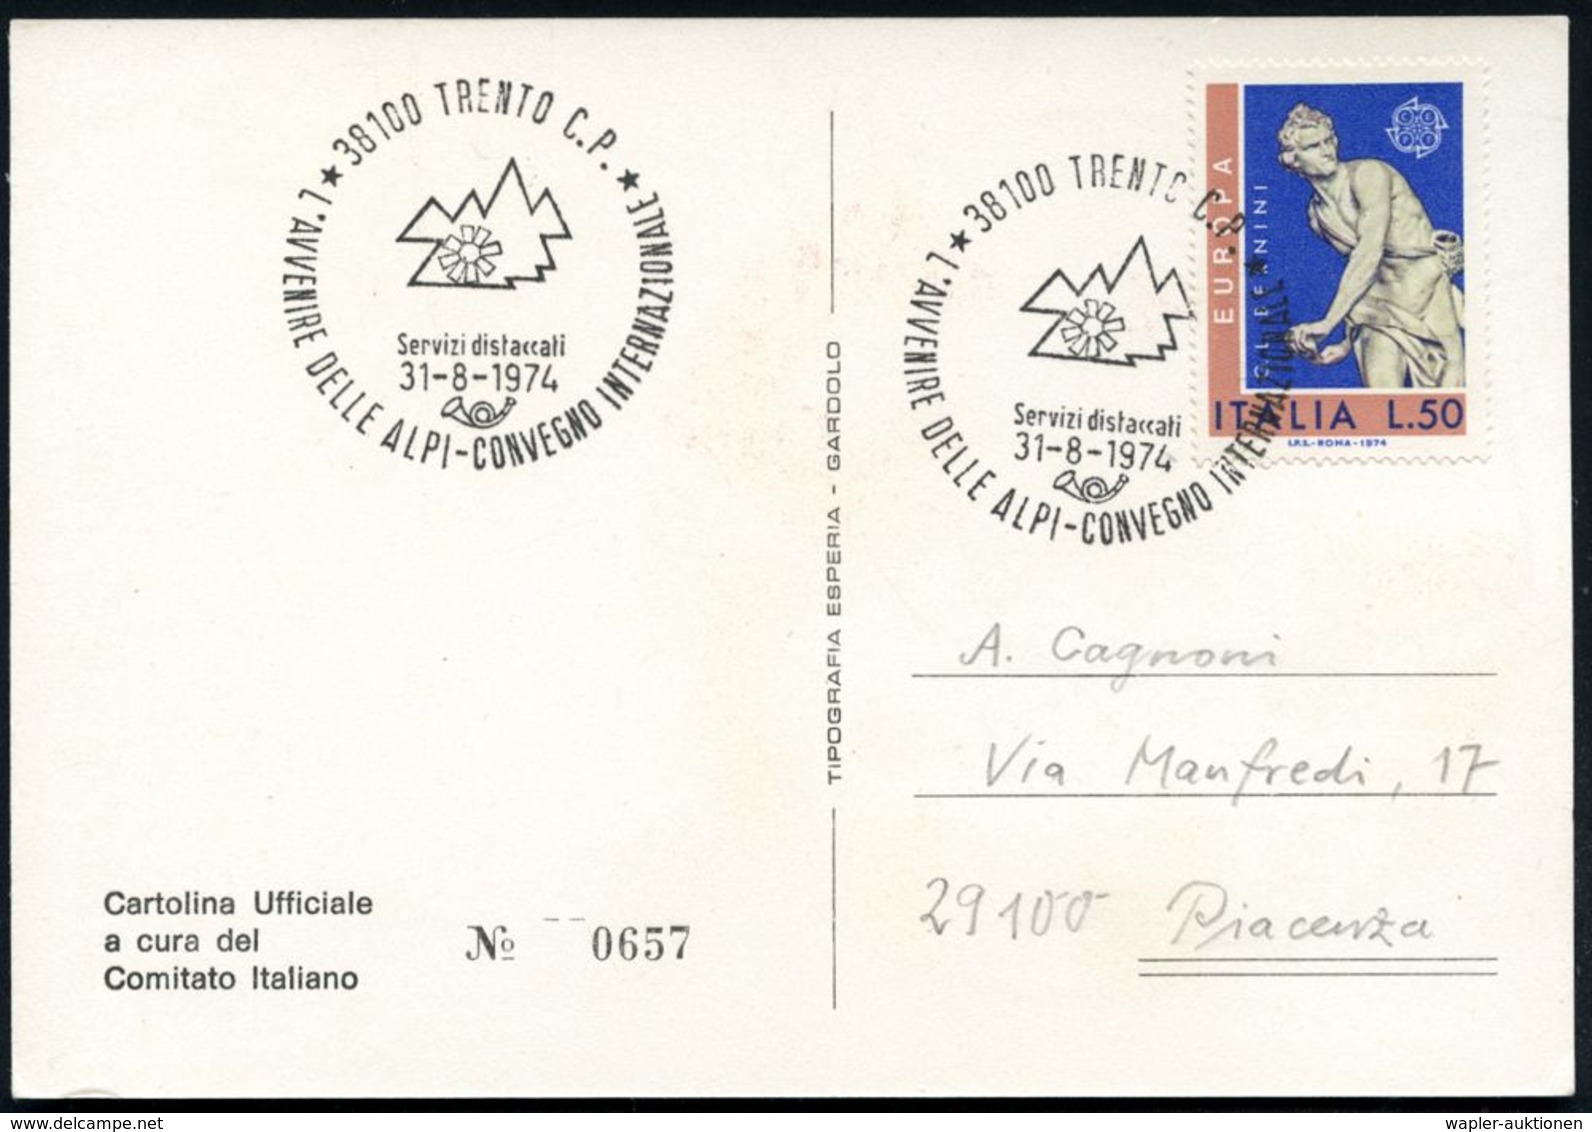 ITALIEN 1974 (31.8.) SSt.: 38100 TRENTO C.P./L'AVVENIRE DELLE ALPI-CONVEGNO INTERN. (stilis. Alpen, Blüte, Flaggen Der A - Unclassified